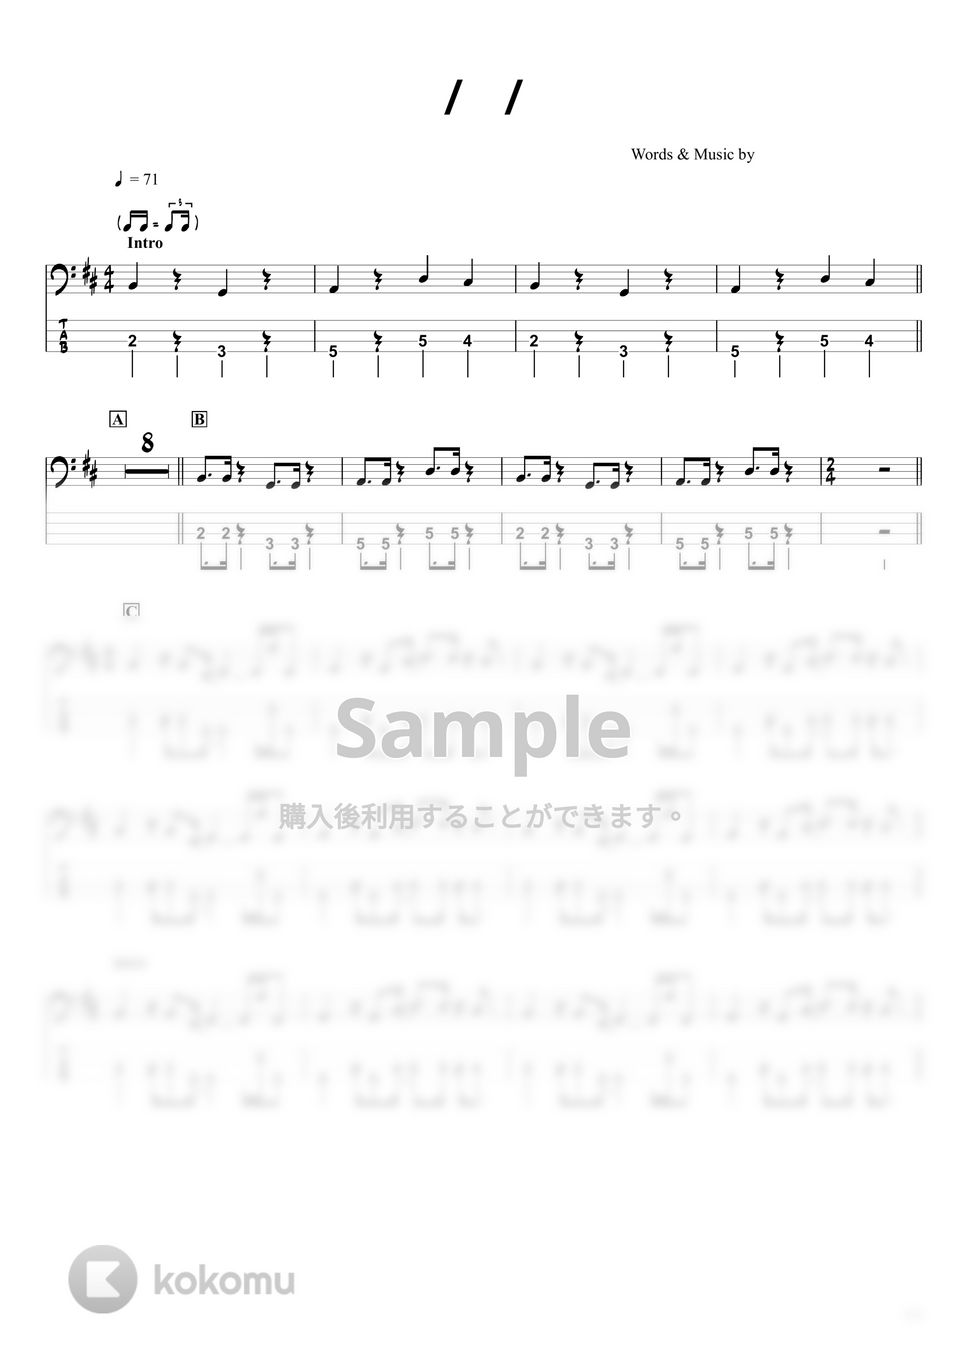 Tani Yuuki - W/X/Y (ベースTAB譜☆4弦ベース対応) by swbass